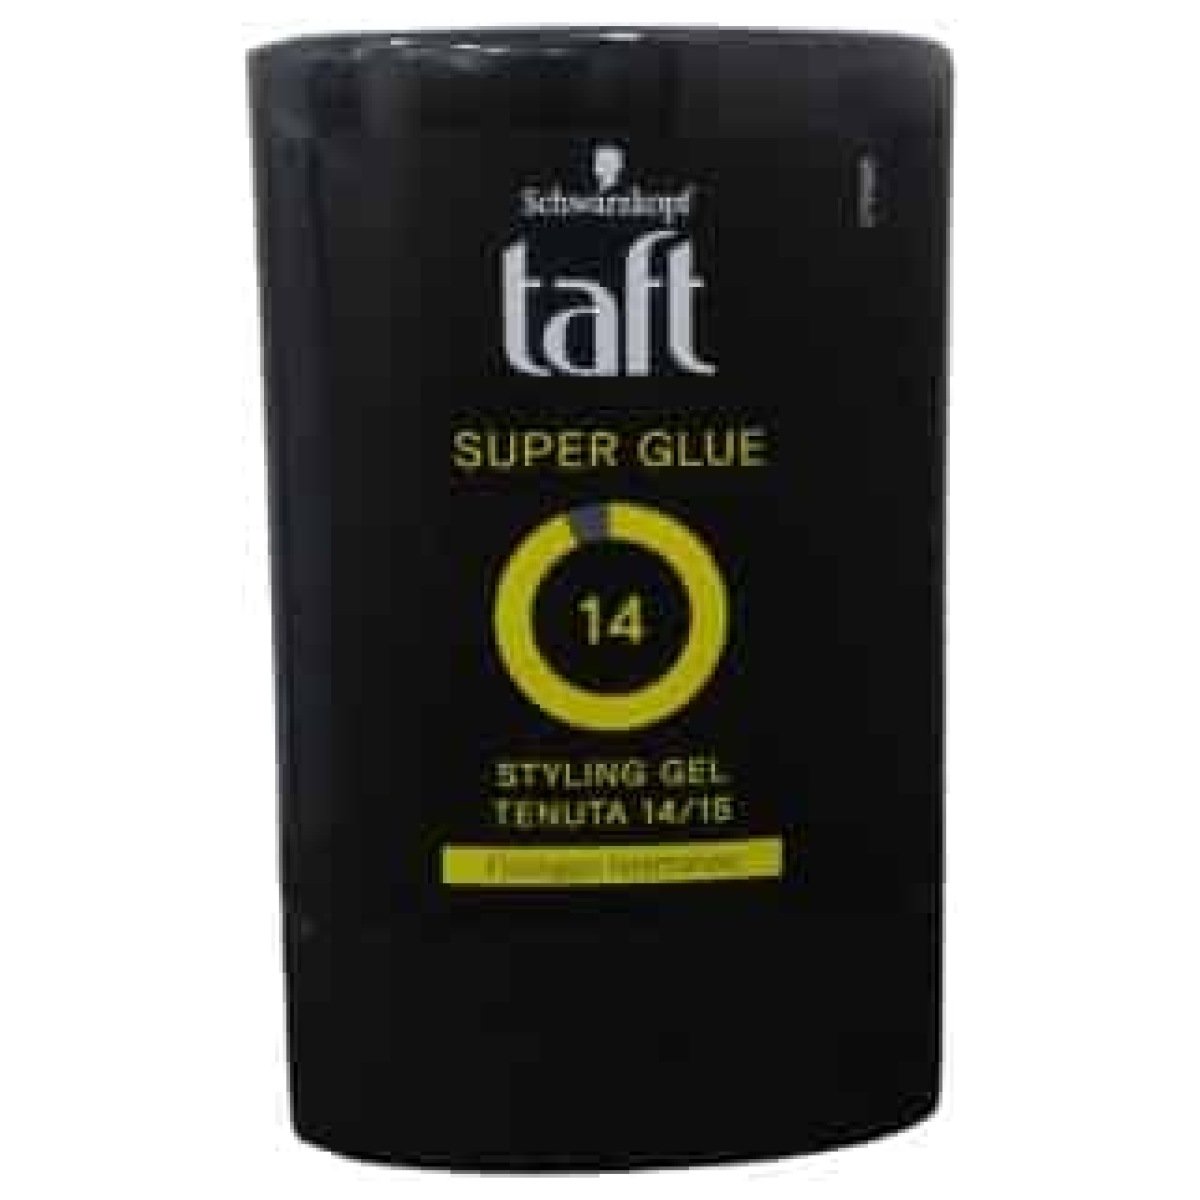 Schwarzkopf Taft Super Glue 14 Hair Styling Gel 300ml